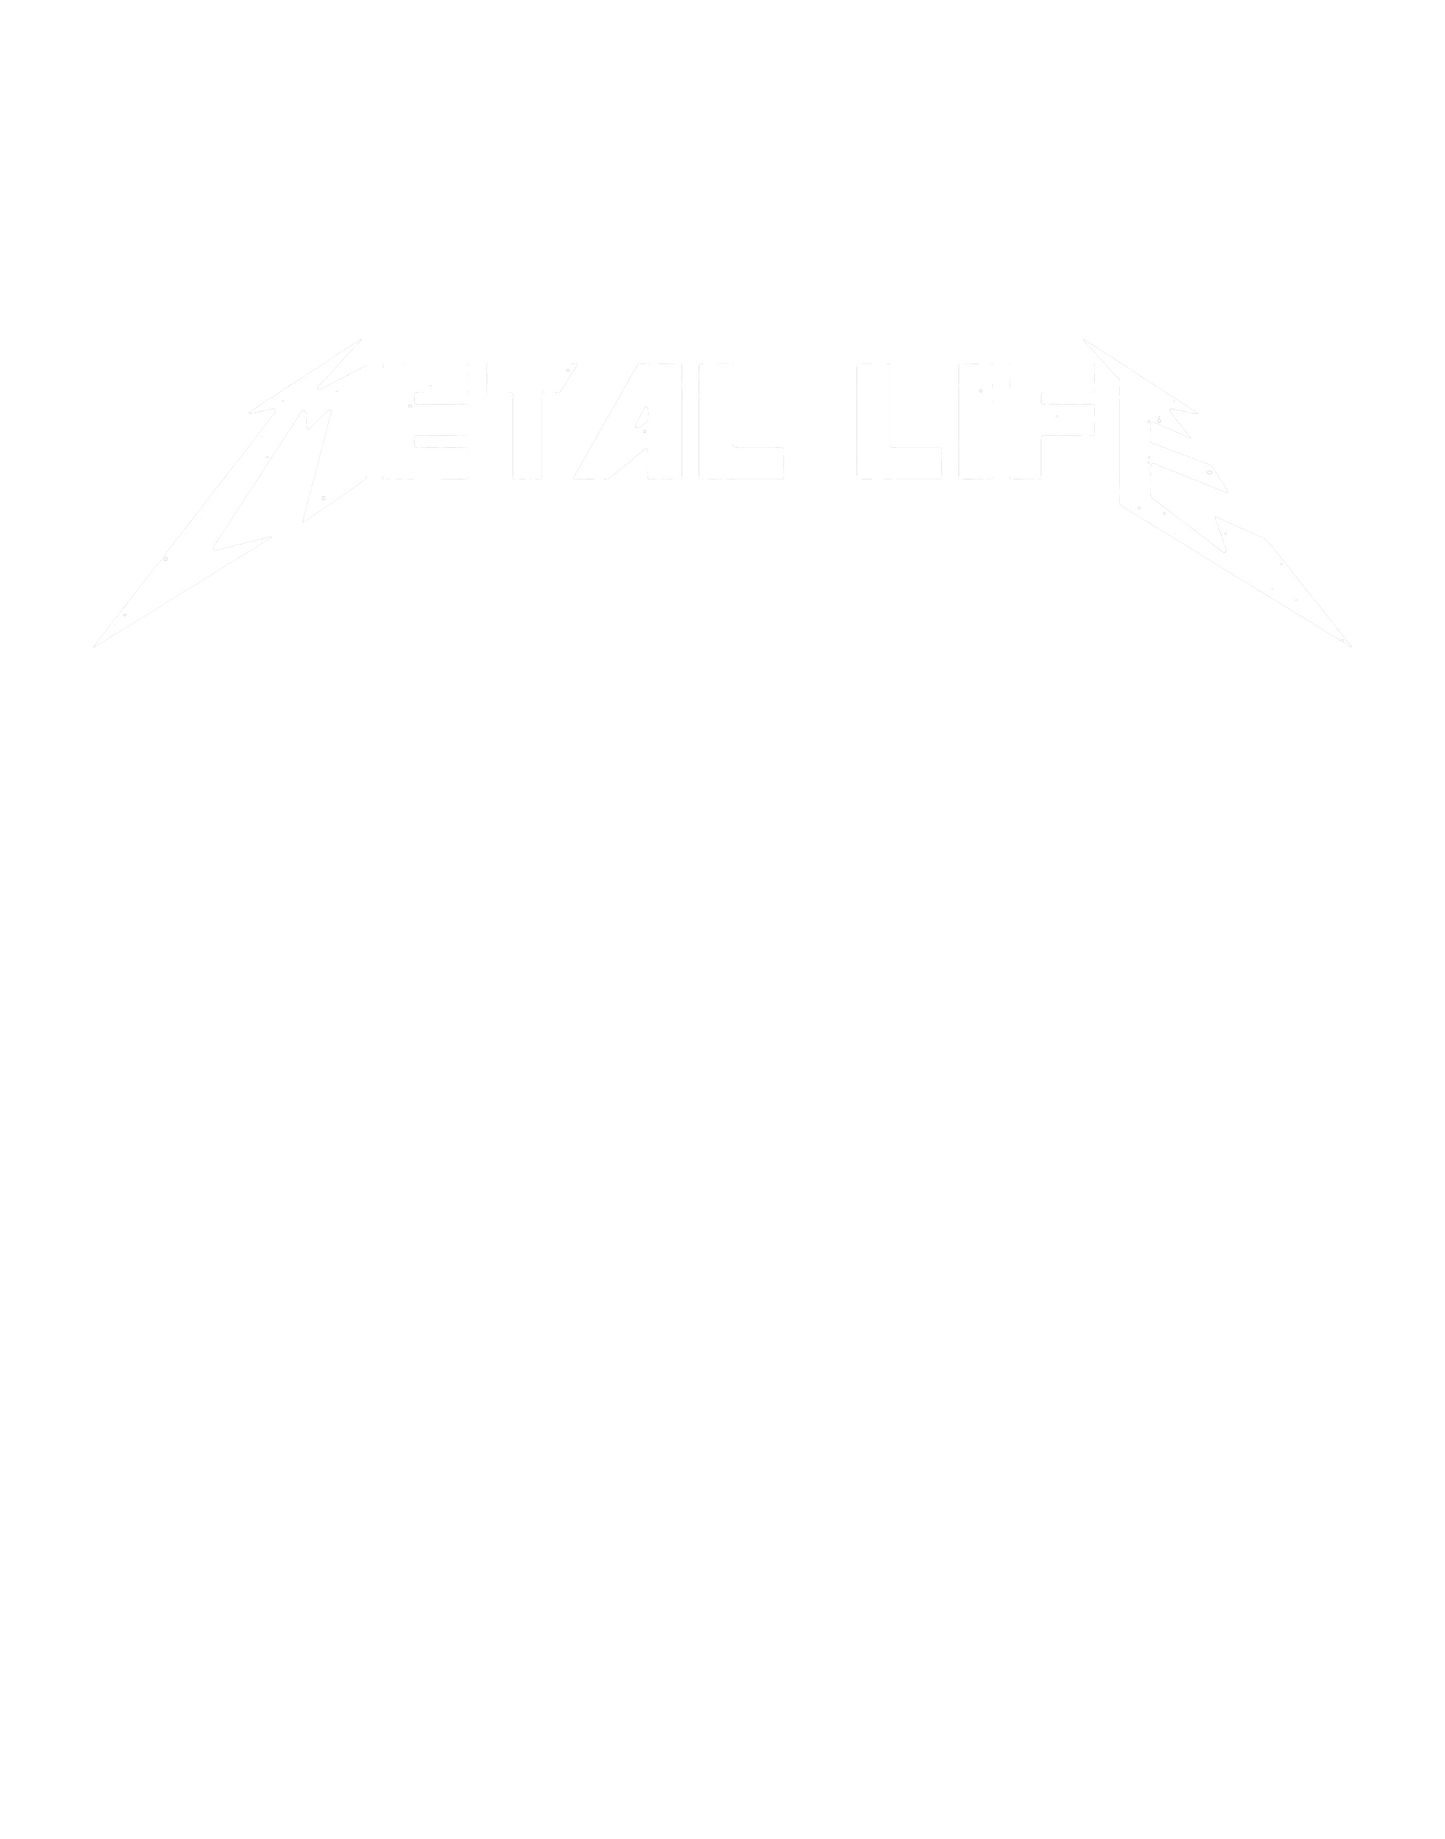 Metal Life